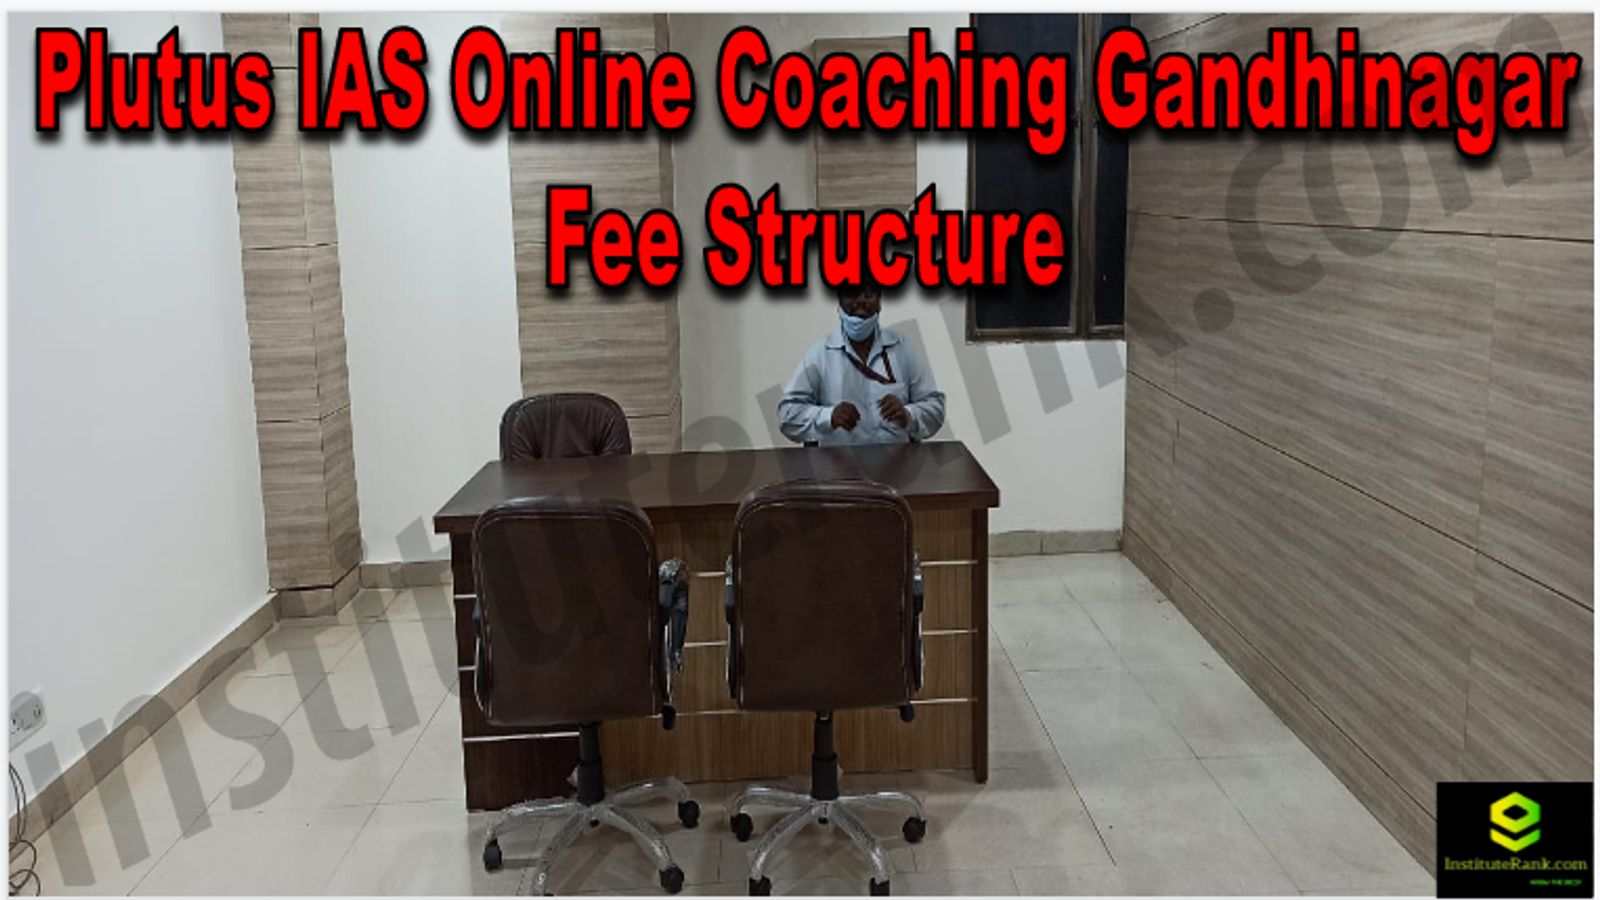 Plutus IAS Online Coaching Gandhinagar Reviews Fee Structure